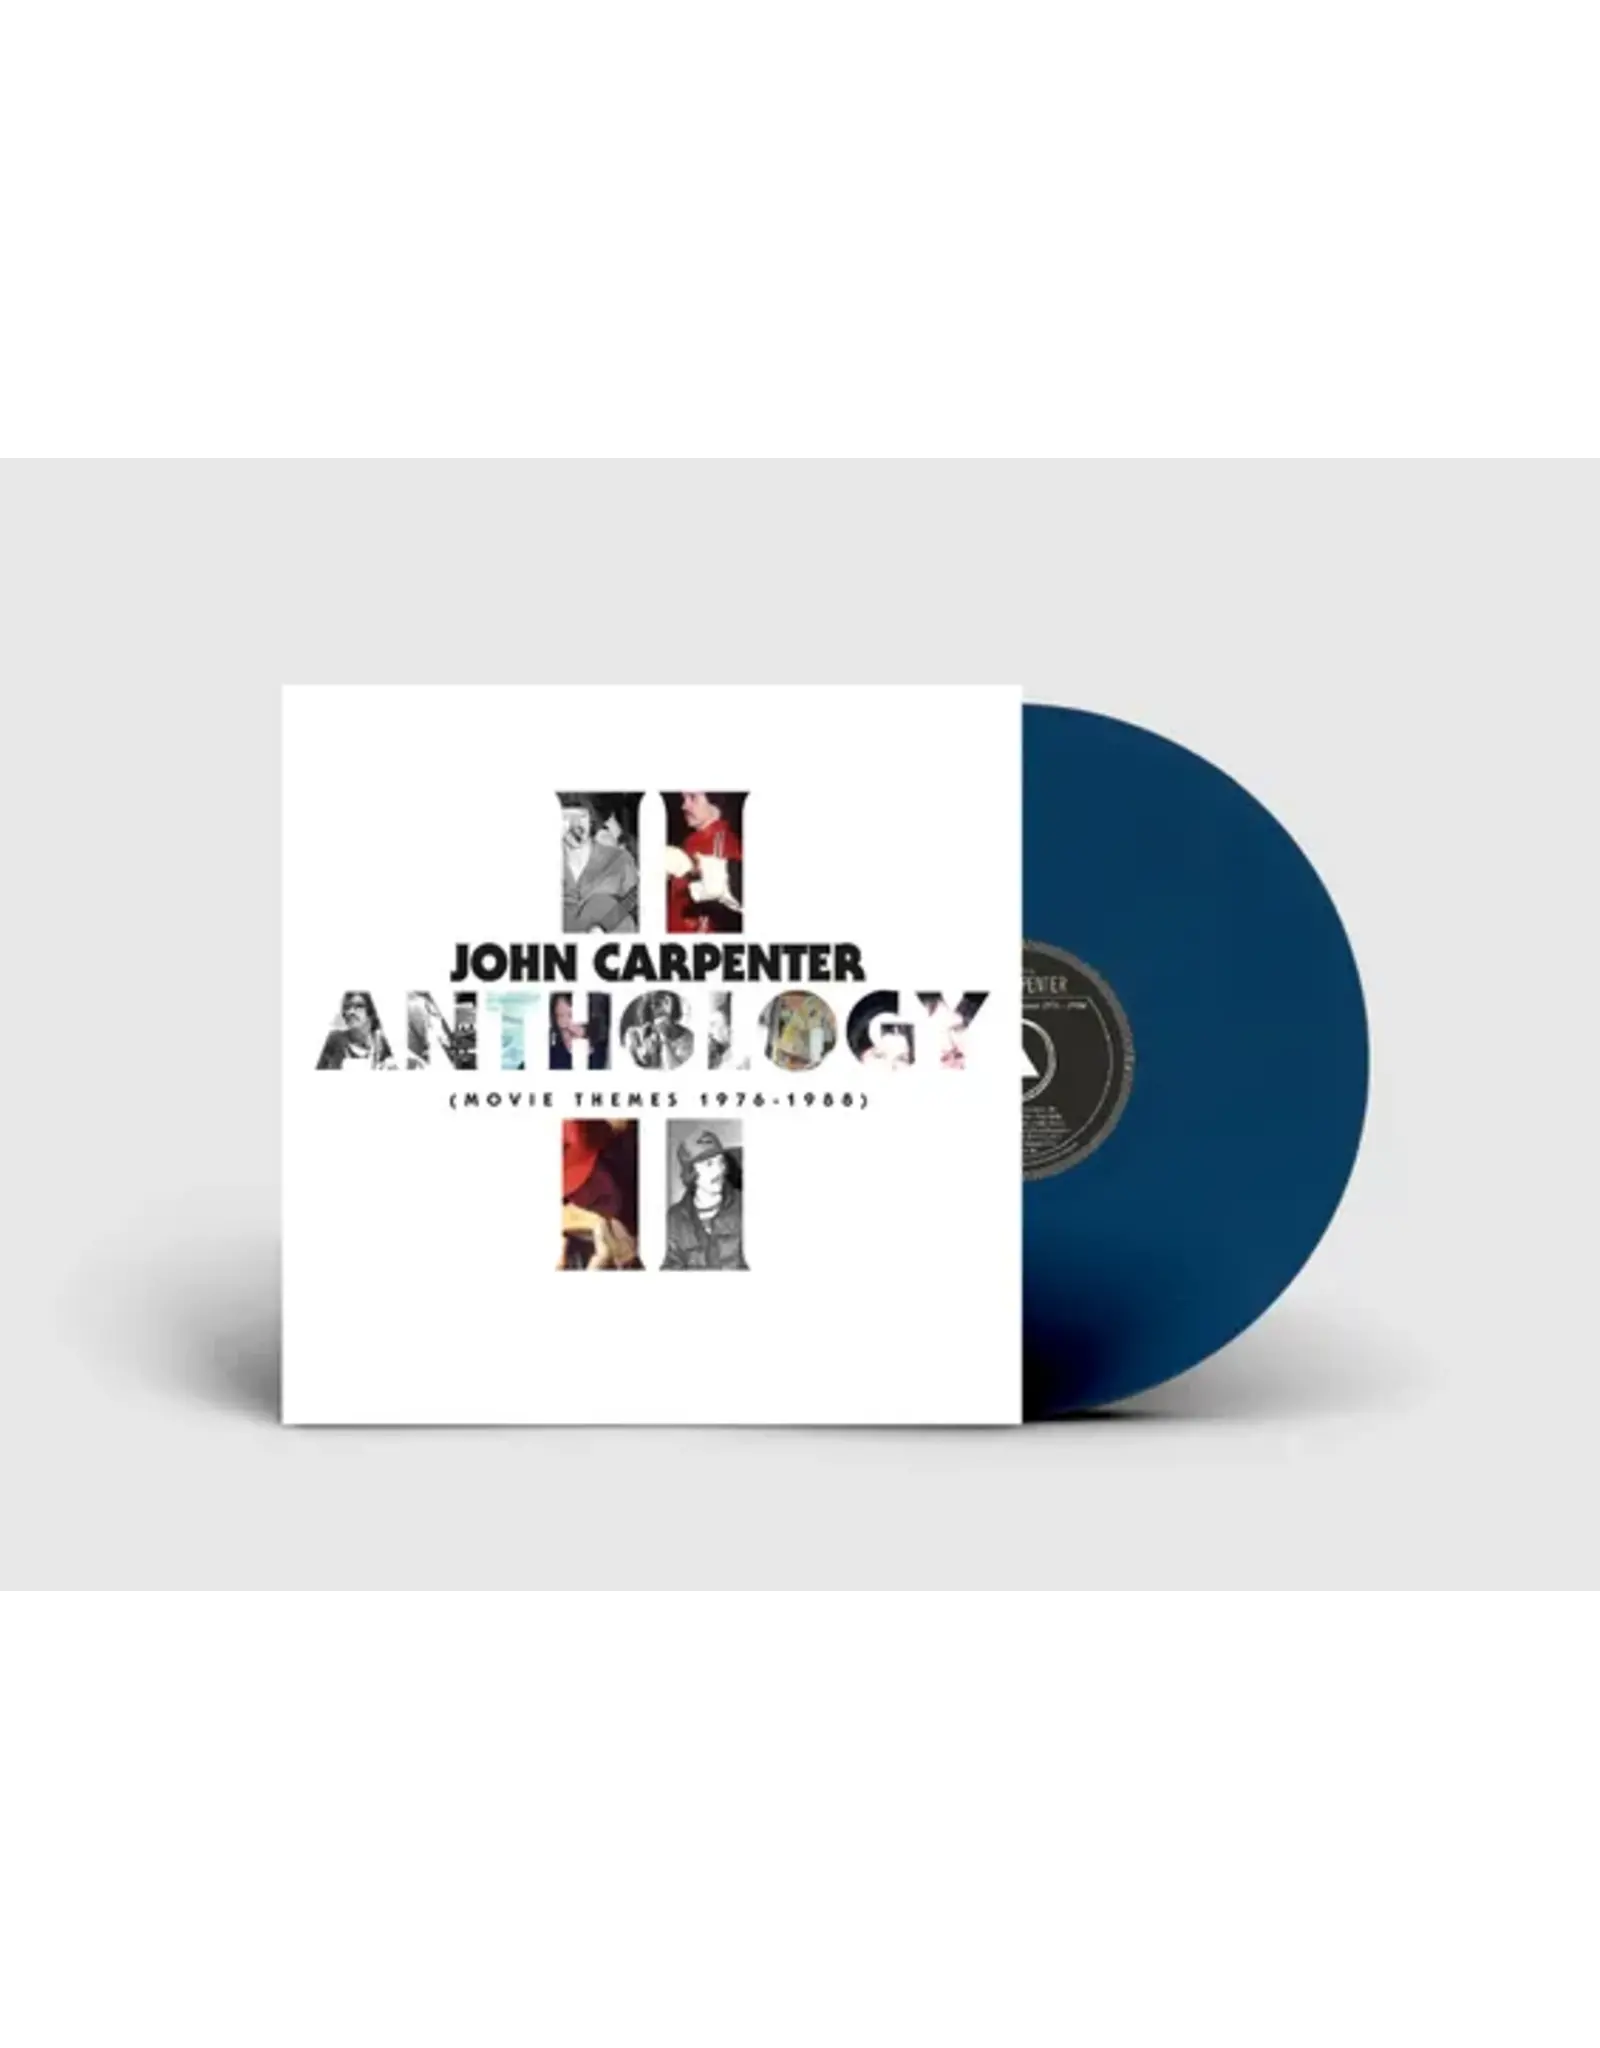 John Carpenter - Anthology II (Movie Themes 1976-1988) [Blue Vinyl]